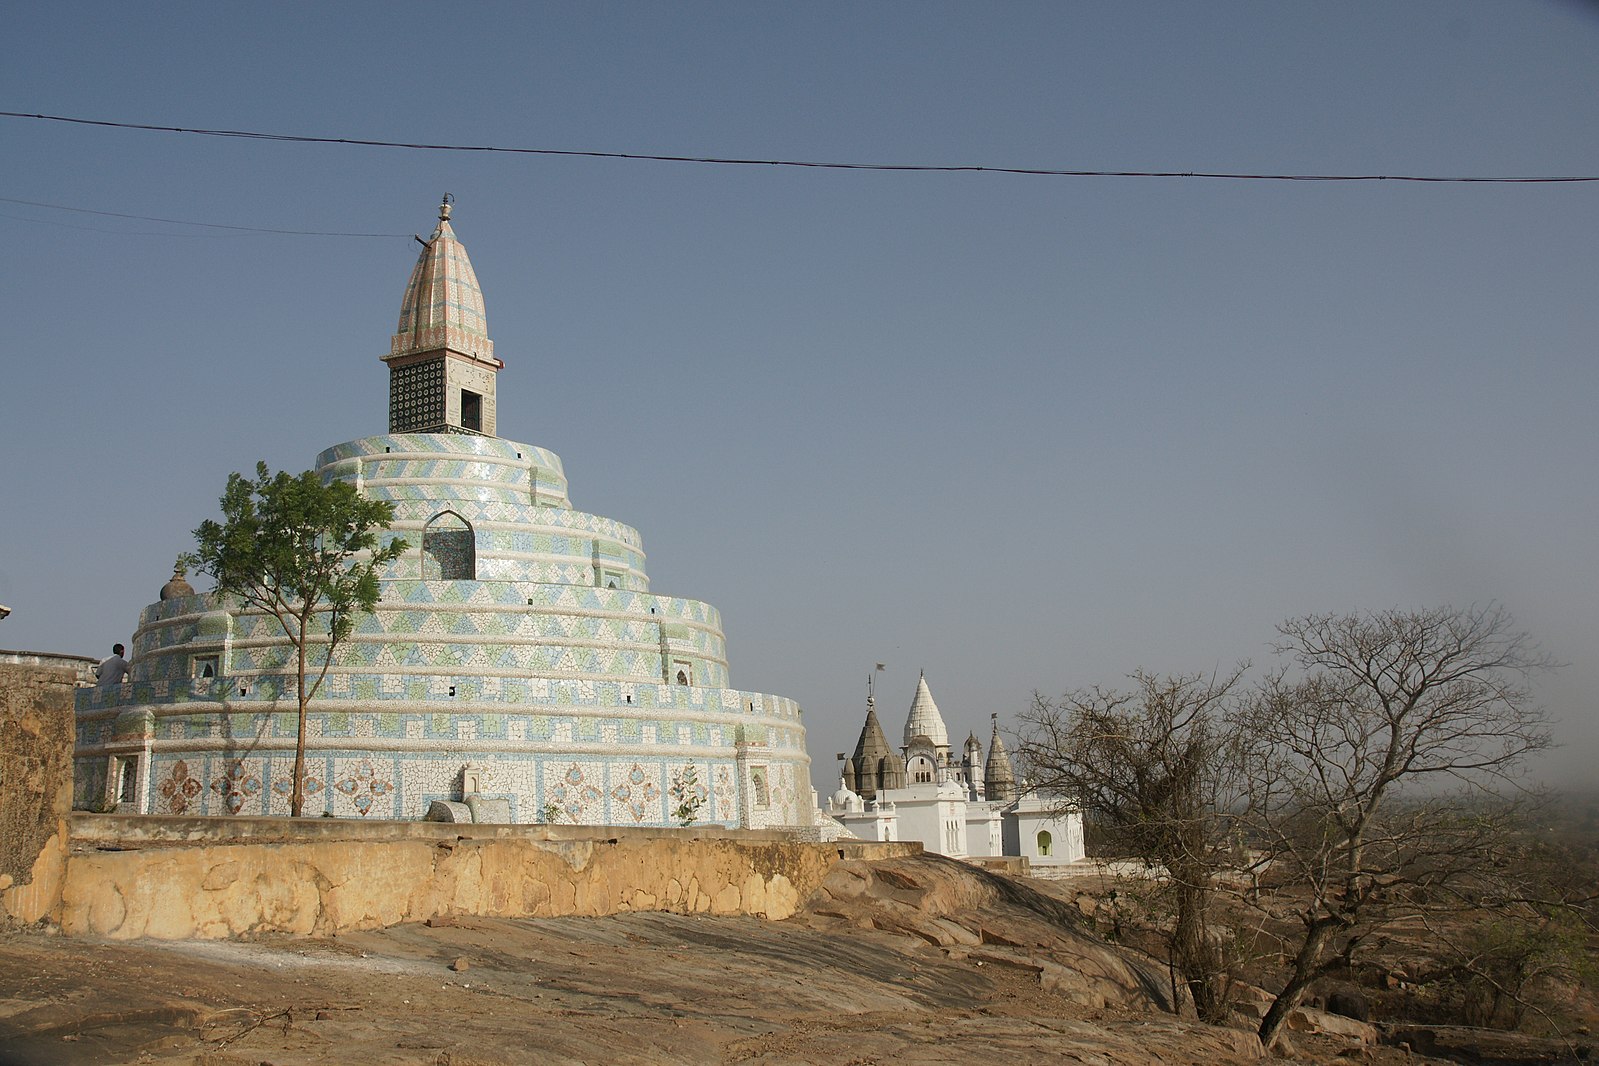 Jain temple at Songiri